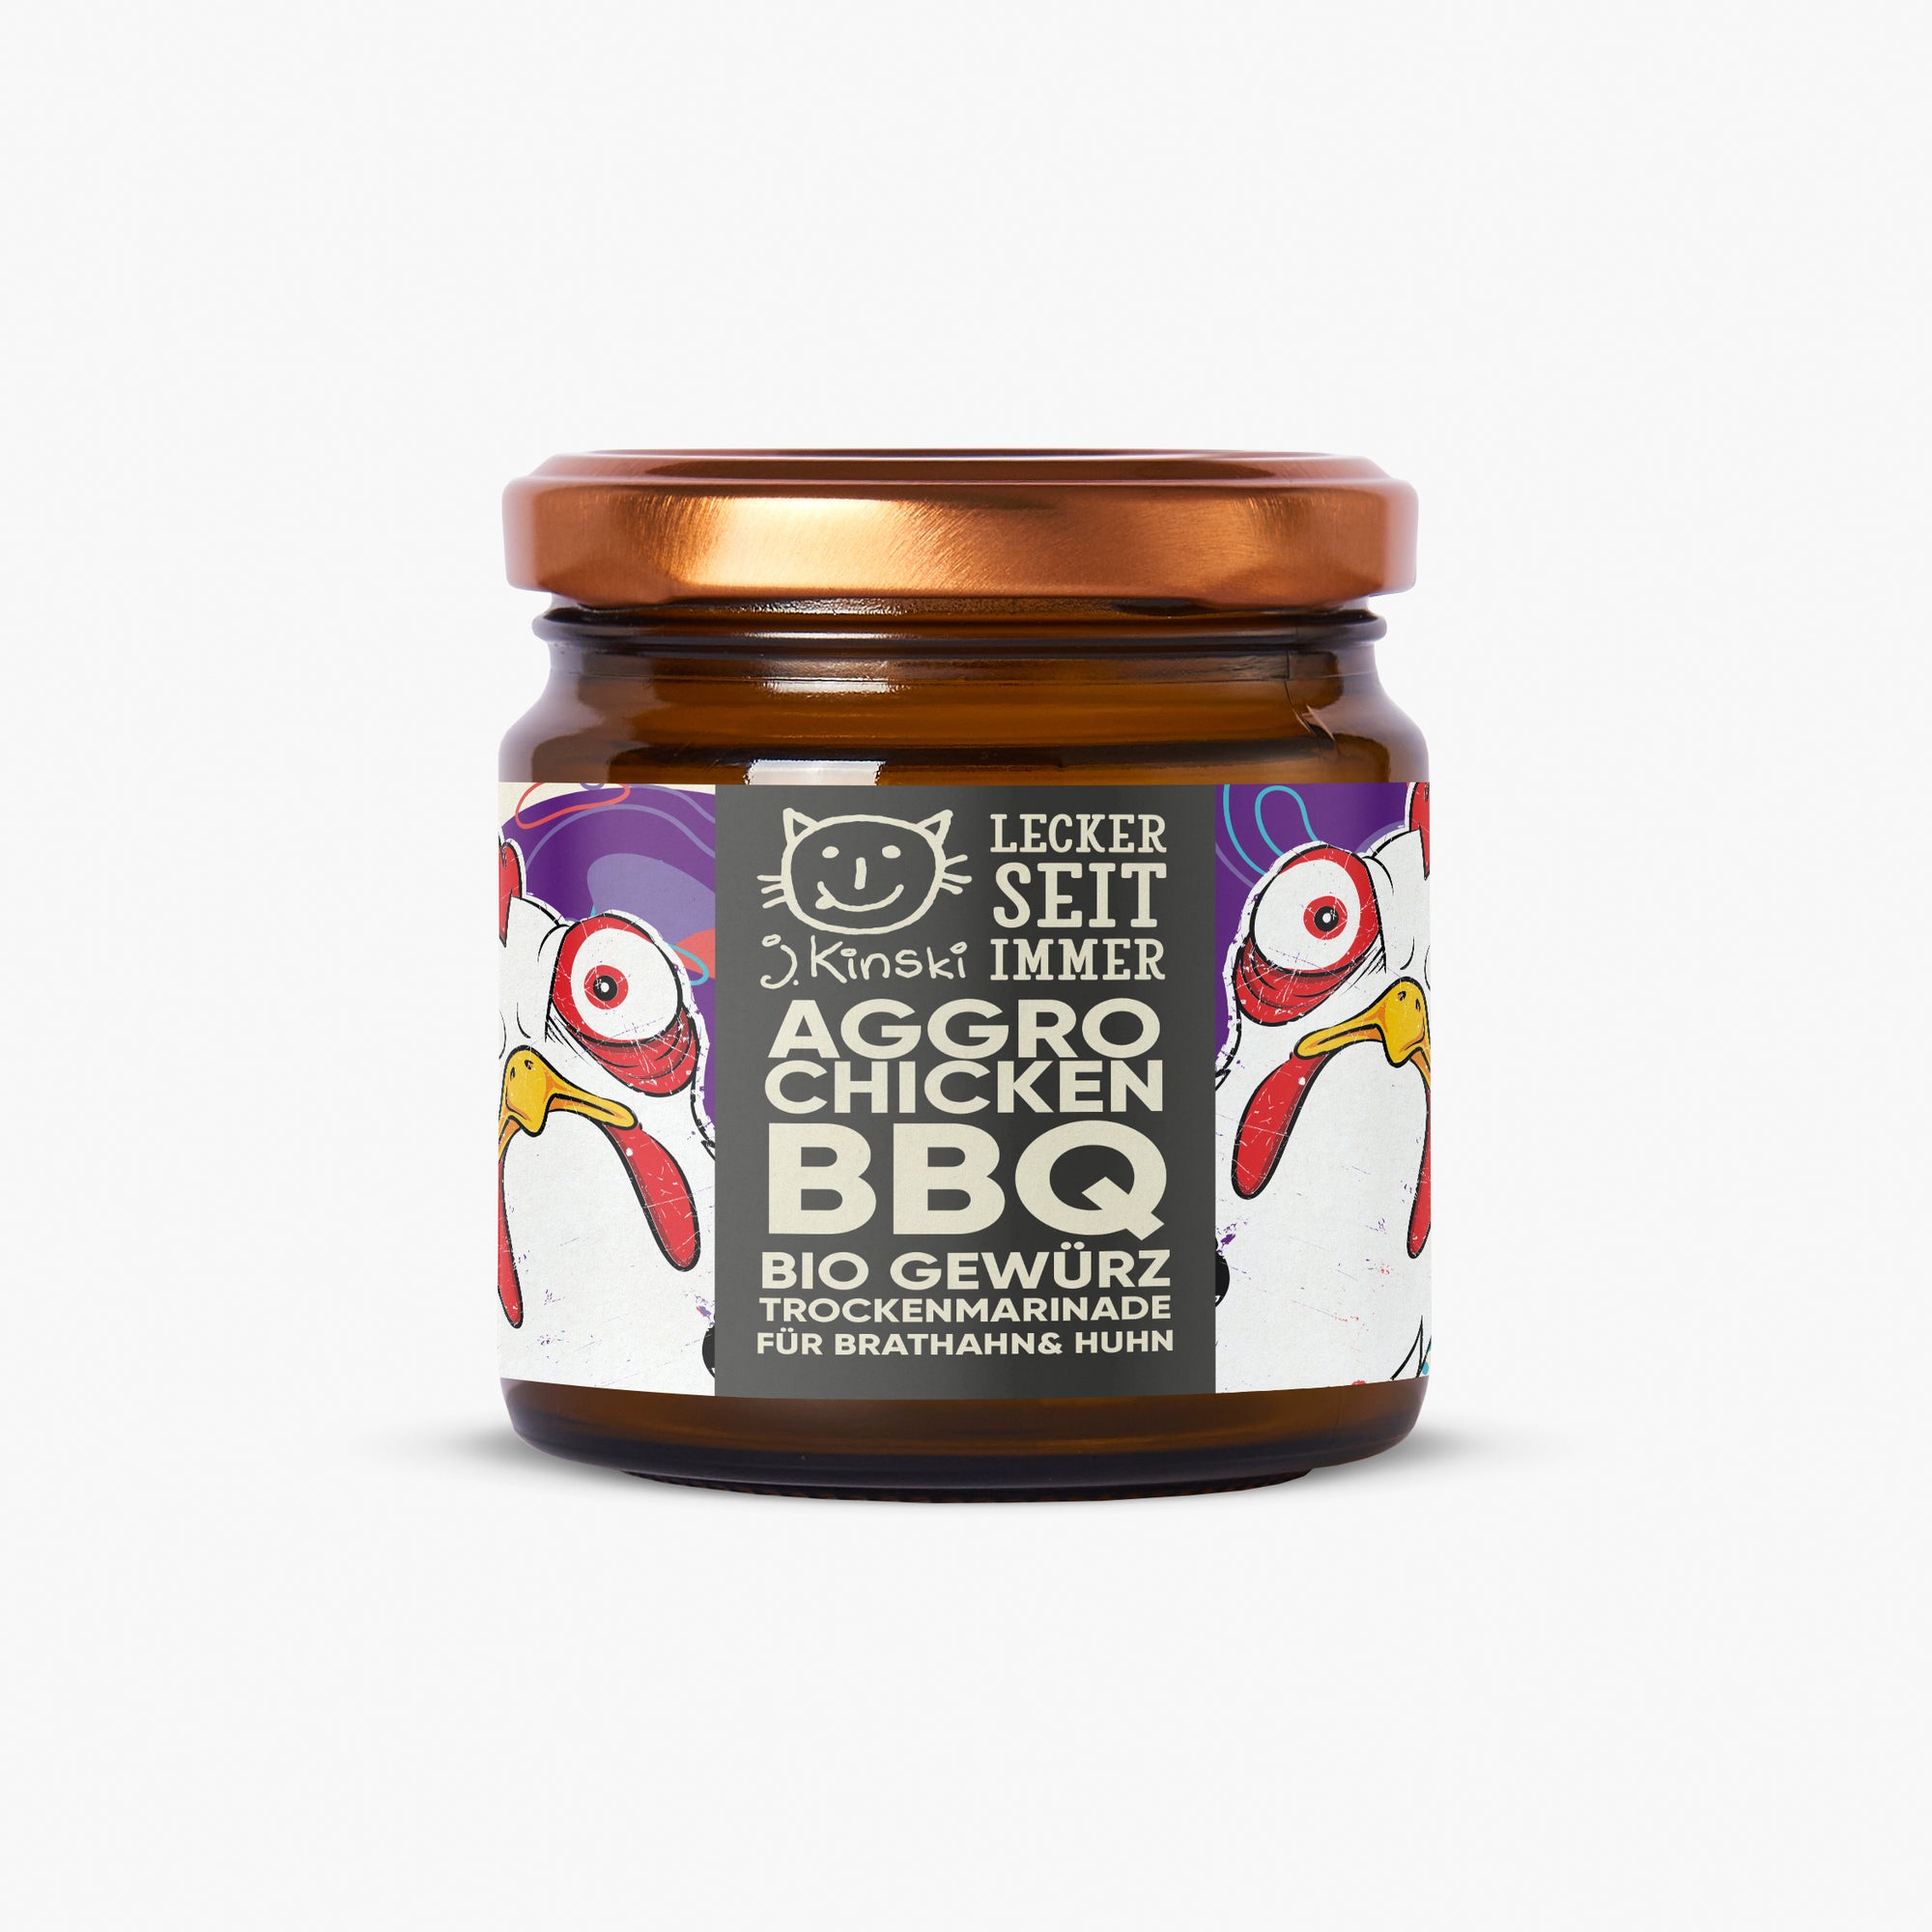 Aggro Chicken BBQ organic seasoning salt 125g